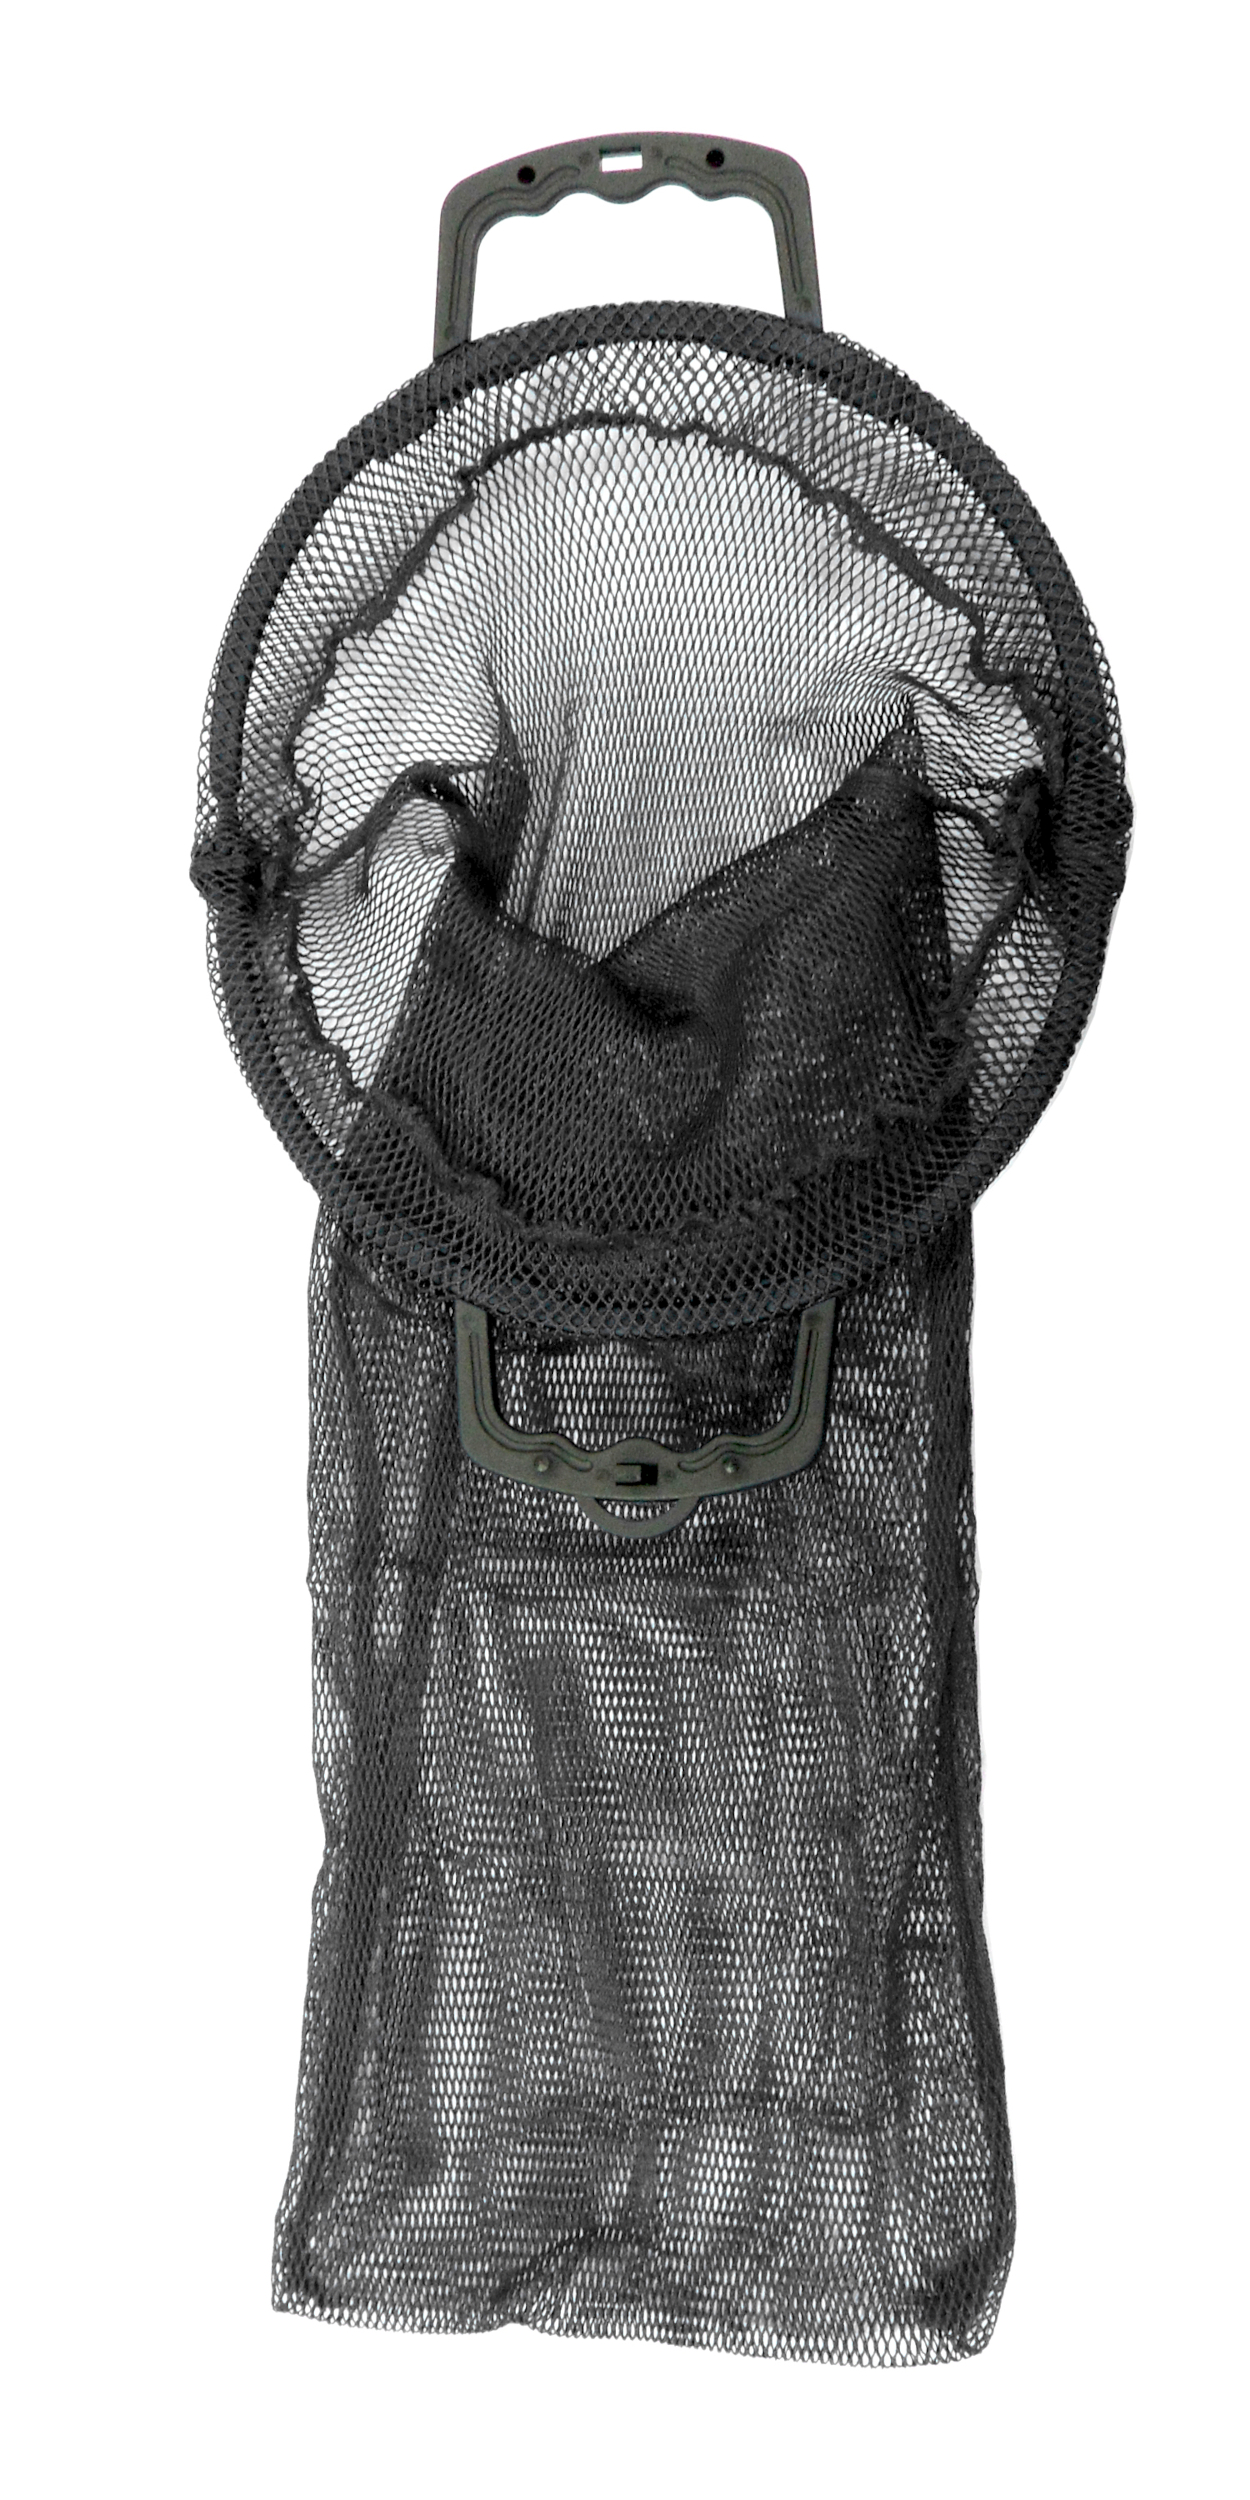 Abysstar Mesh Bag with handle- Slider - Spearfishing UK